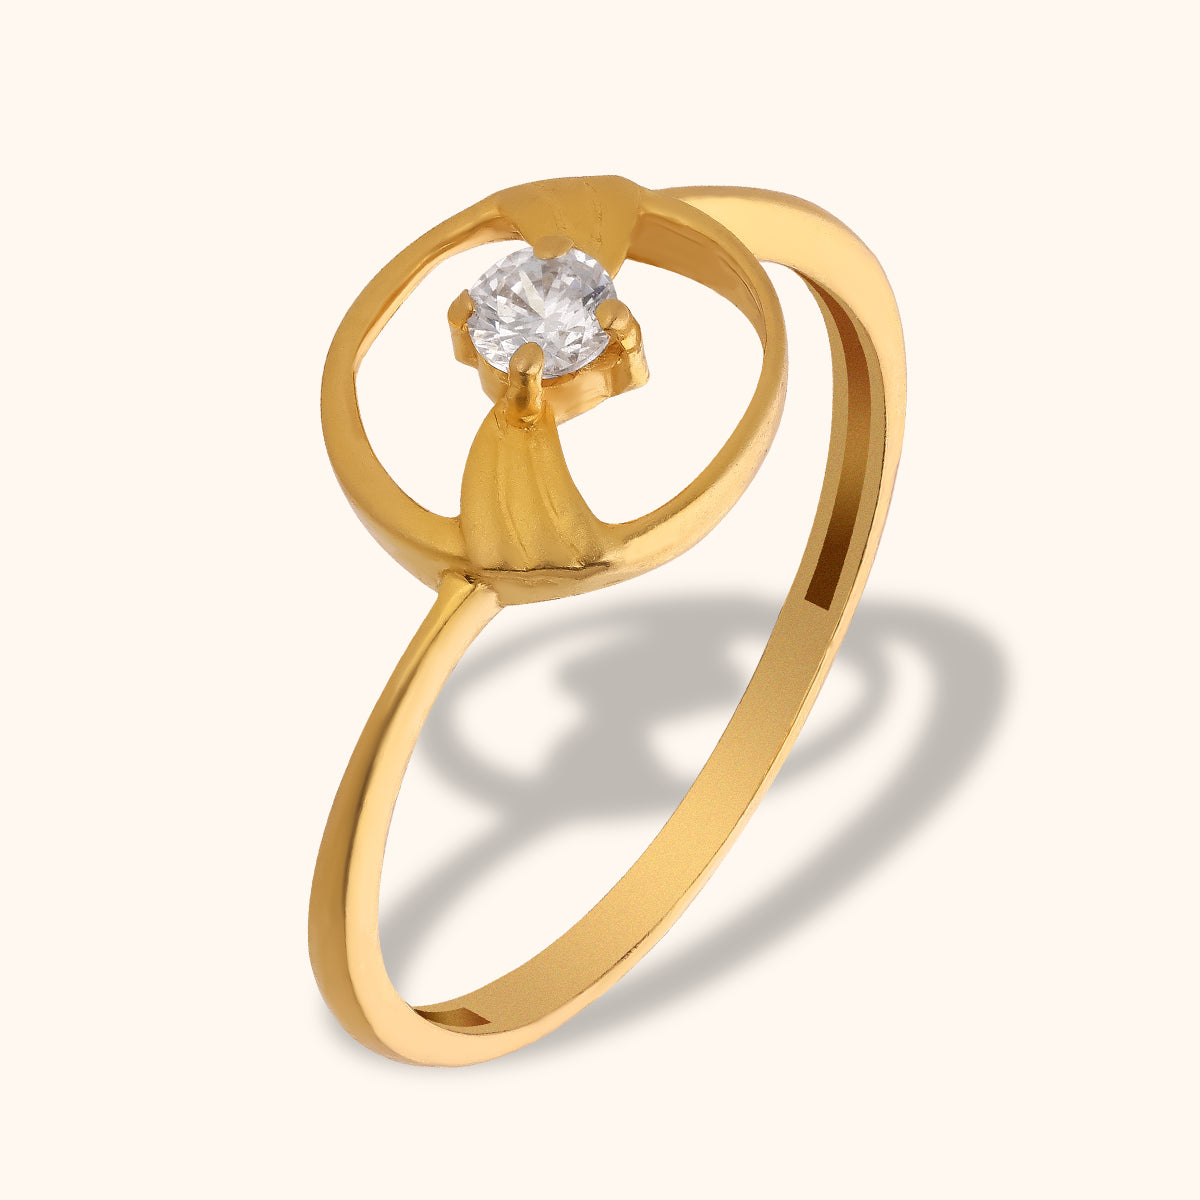 Women's Unique Wedding Ring Designs | Diamond Registry